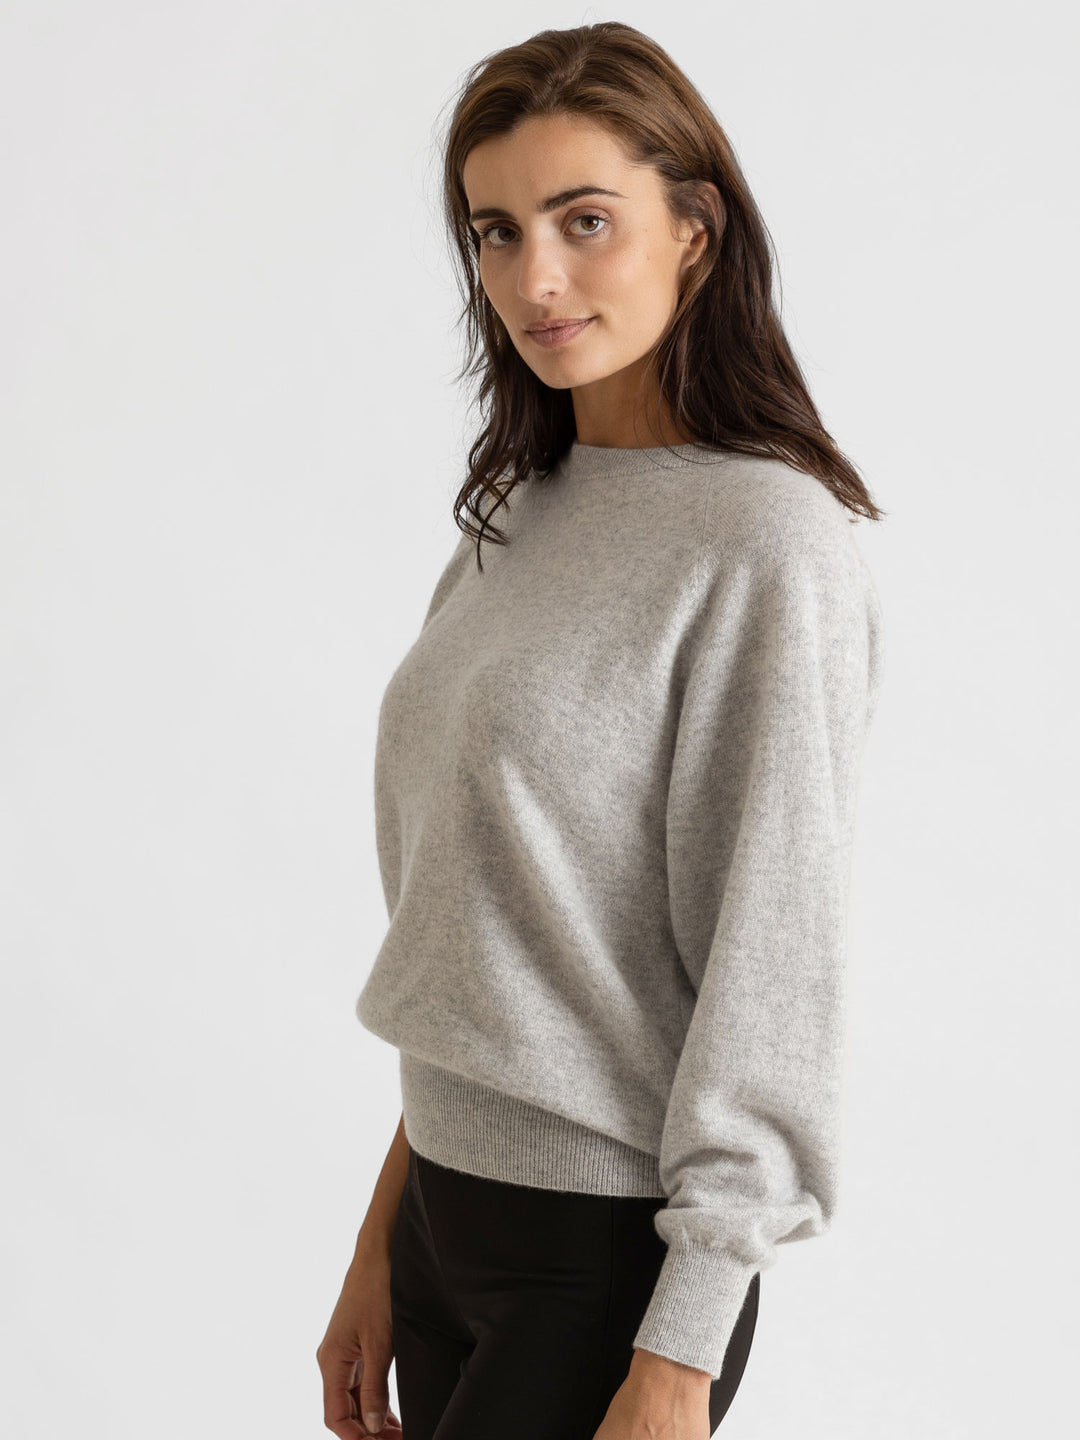 Embla cashmere sweater, 100% cashmere, norwegian design, light grey